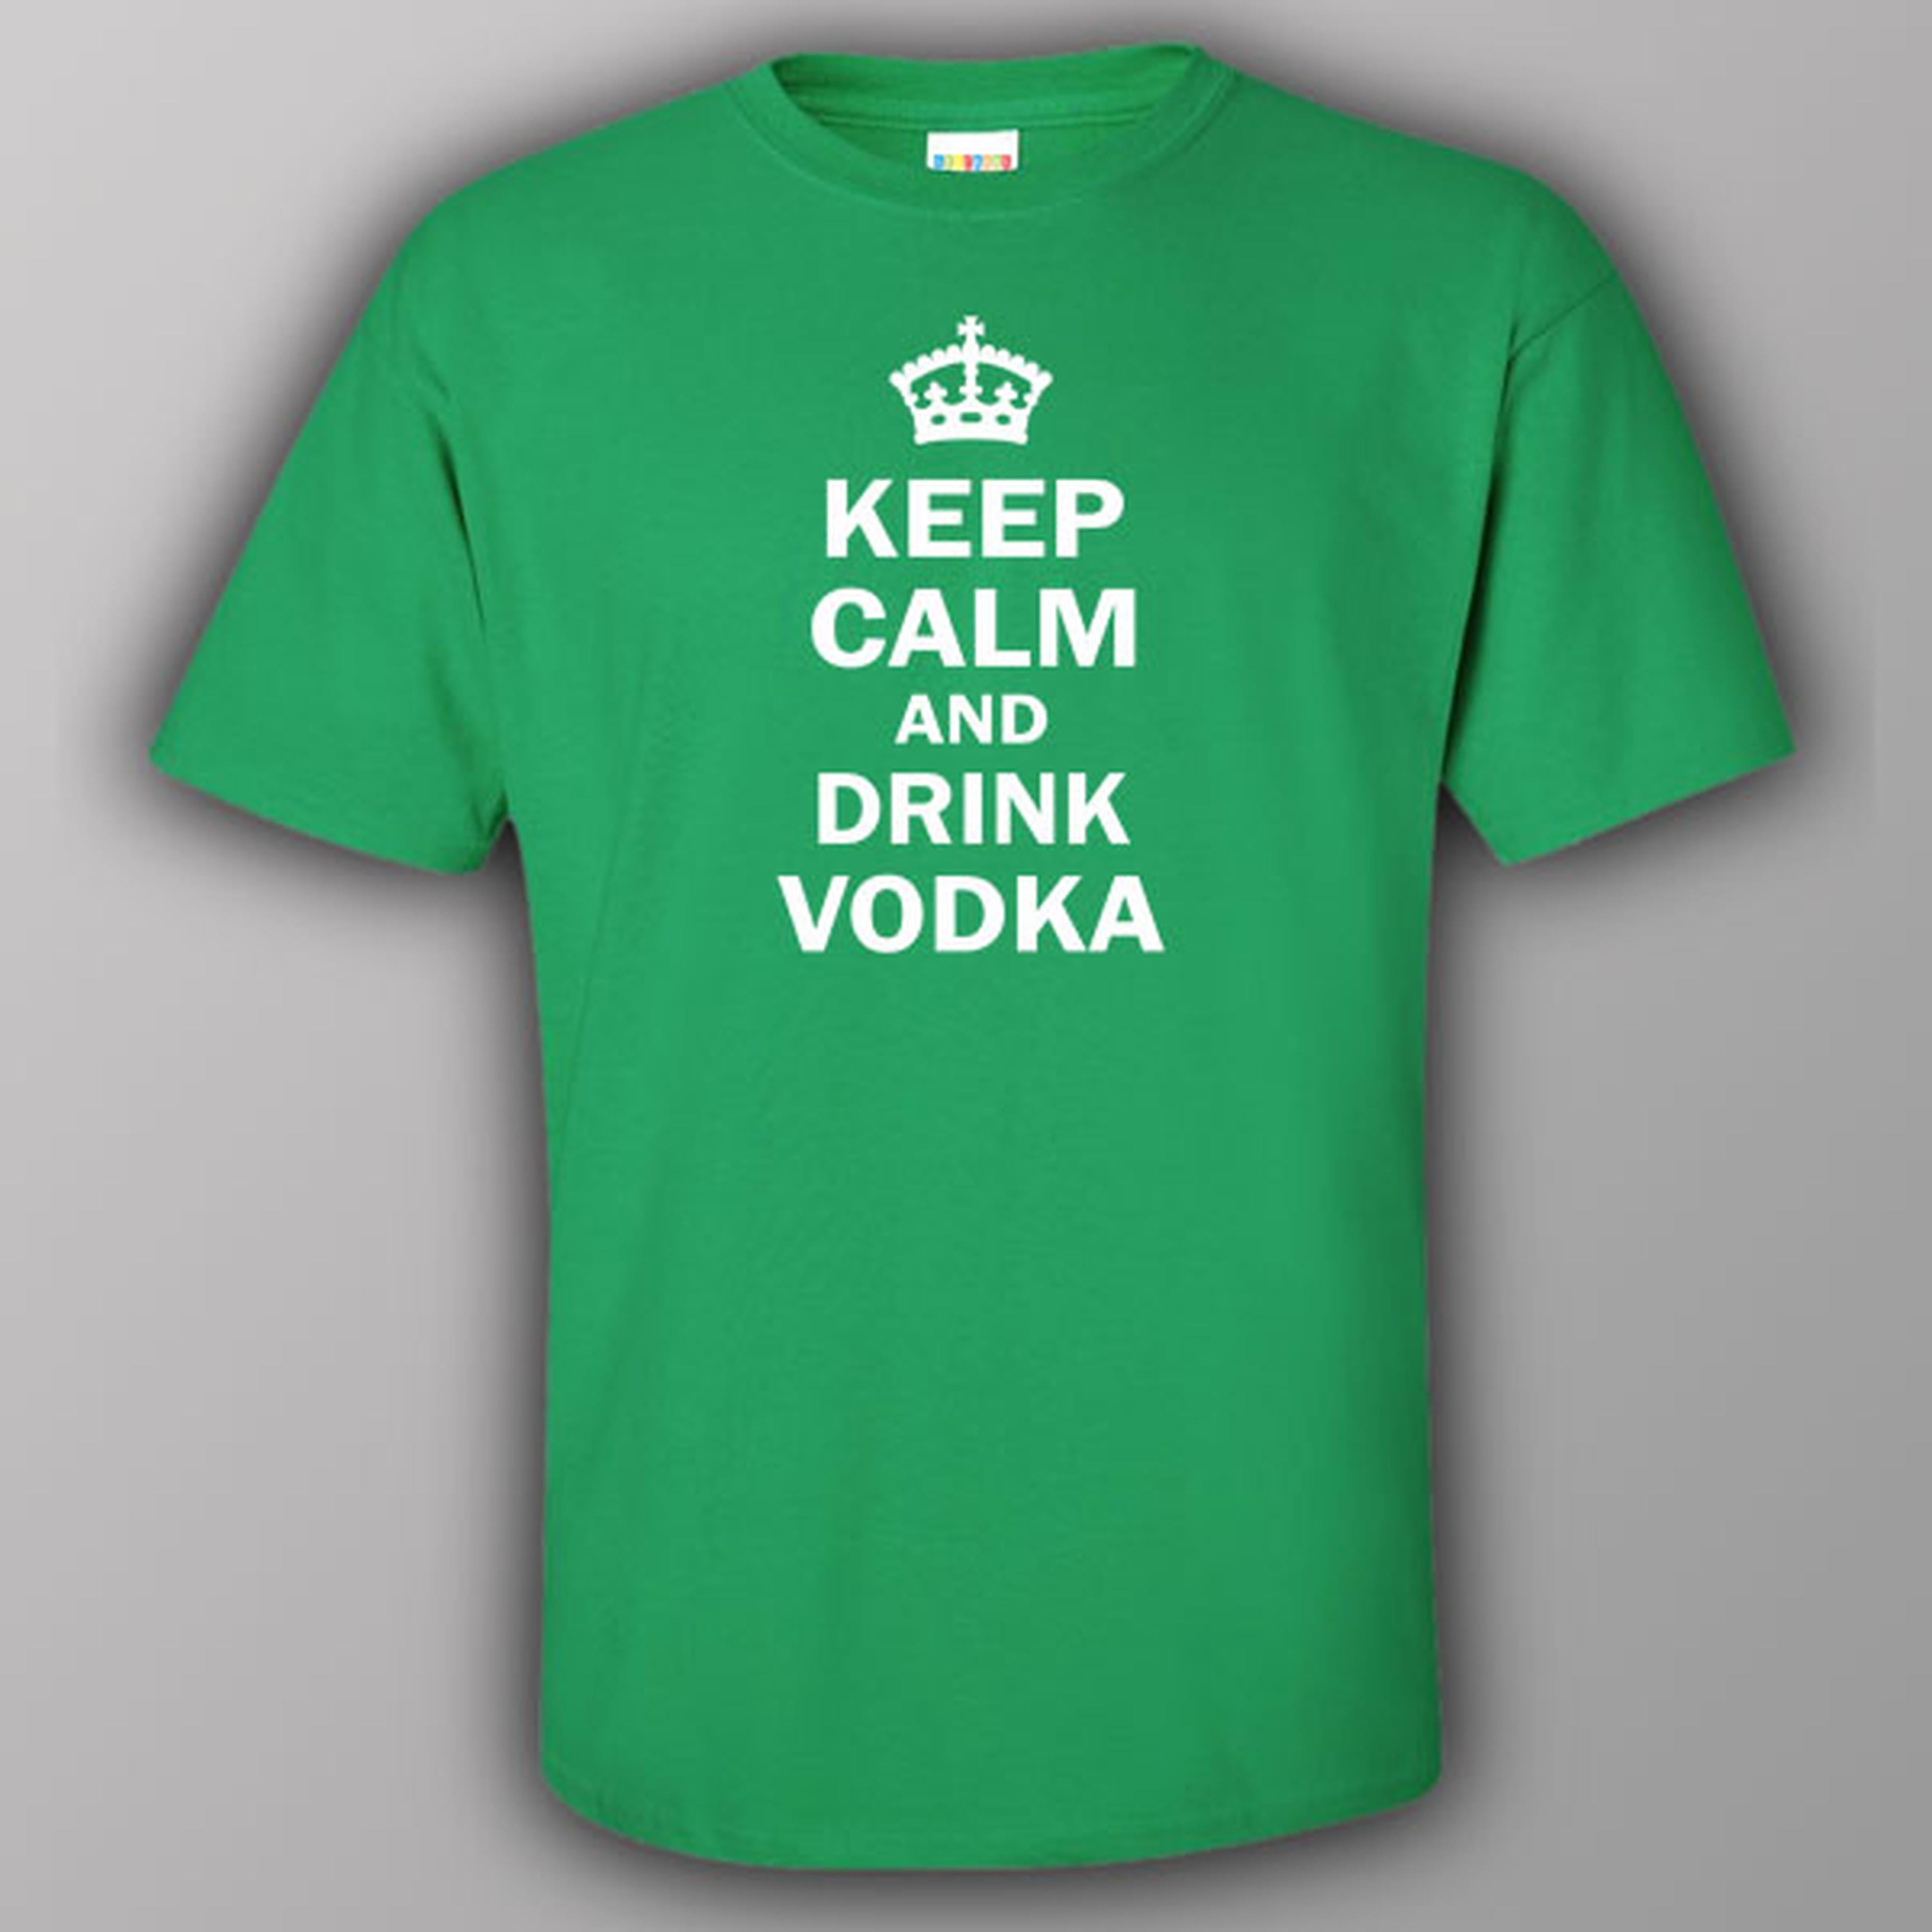 Keep calm and drink vodka - T-shirt